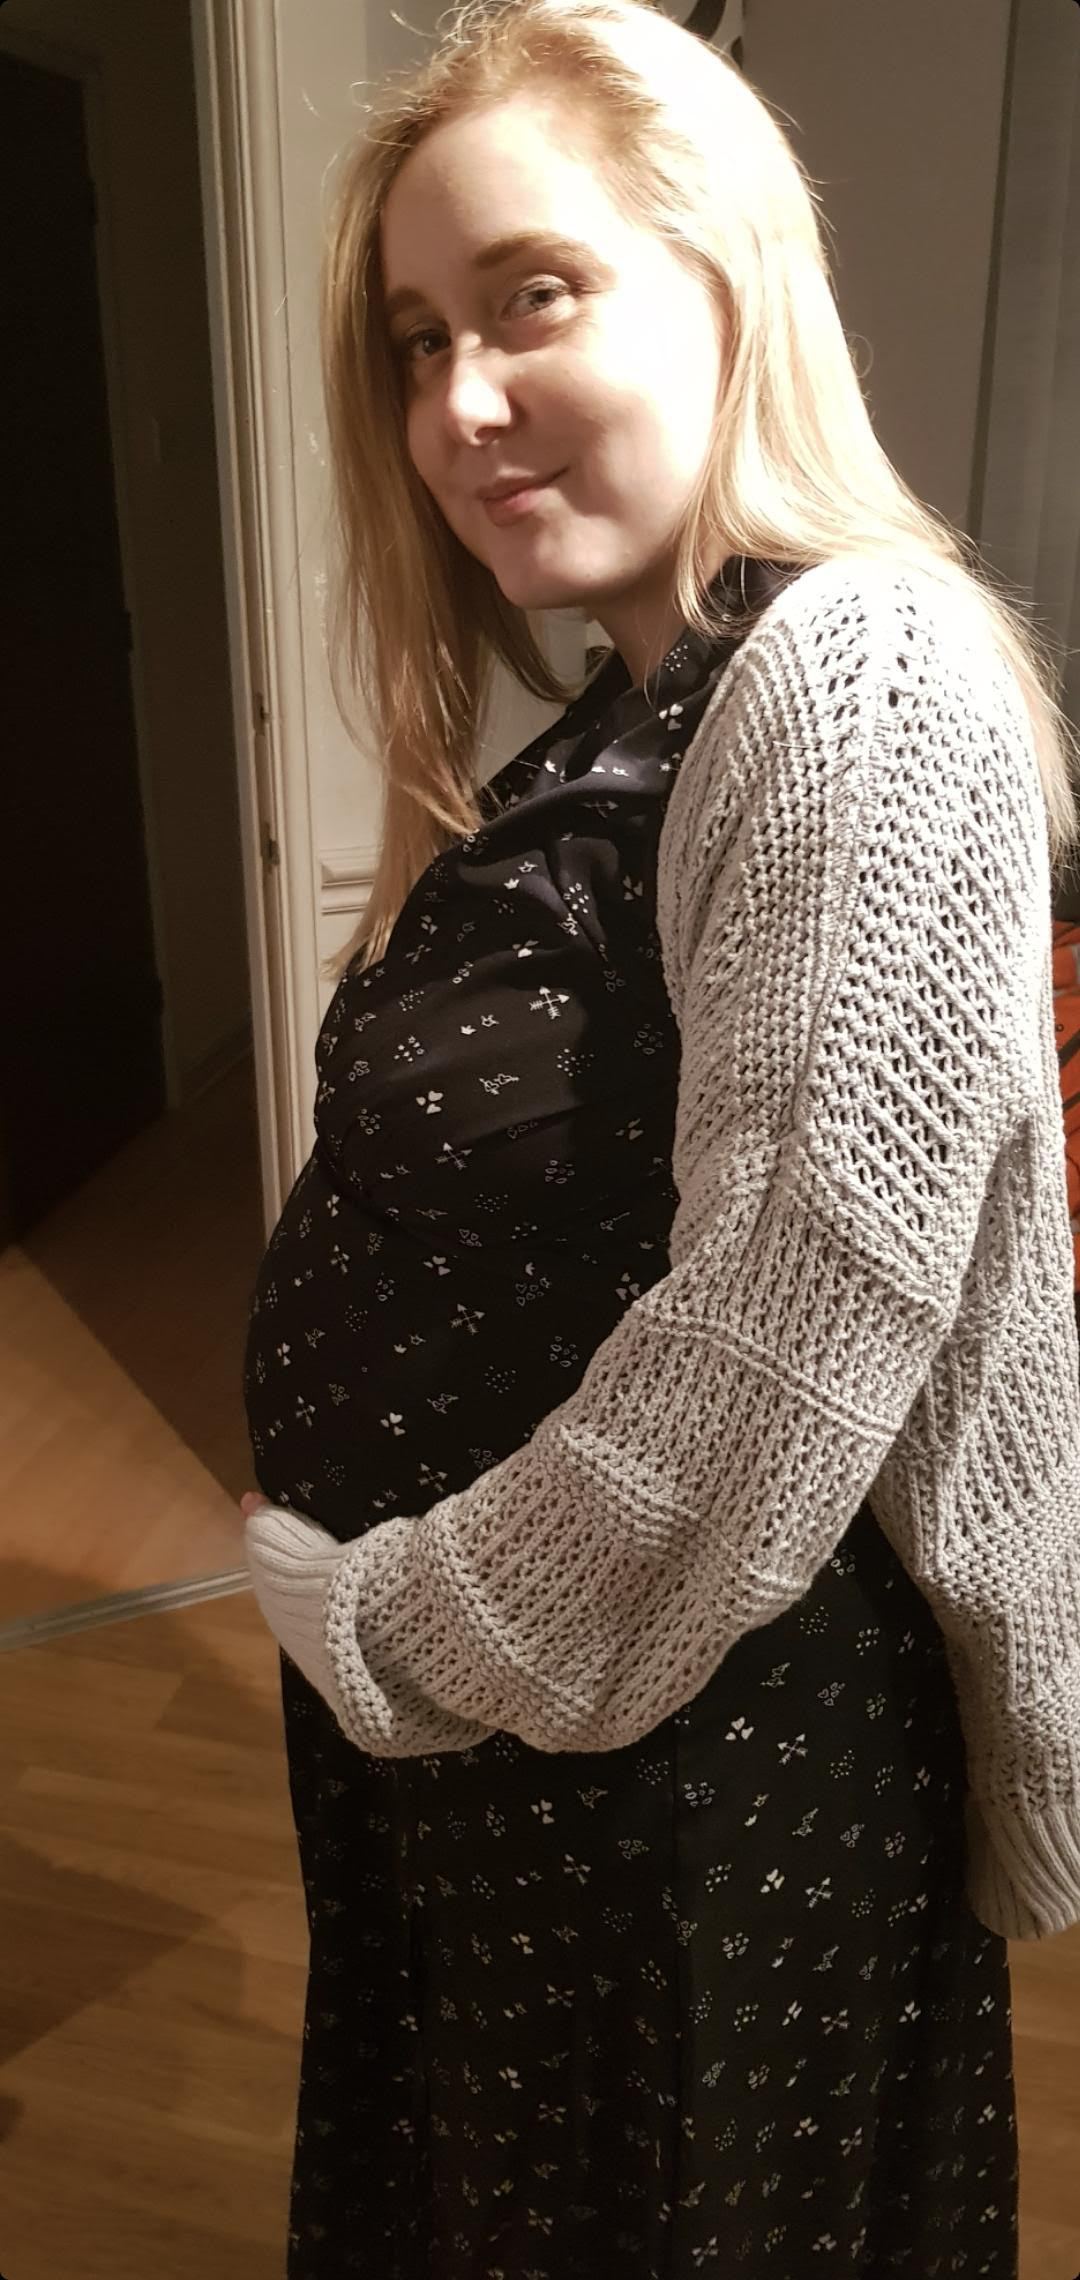 Michaela während ihrer Schwangerschaft